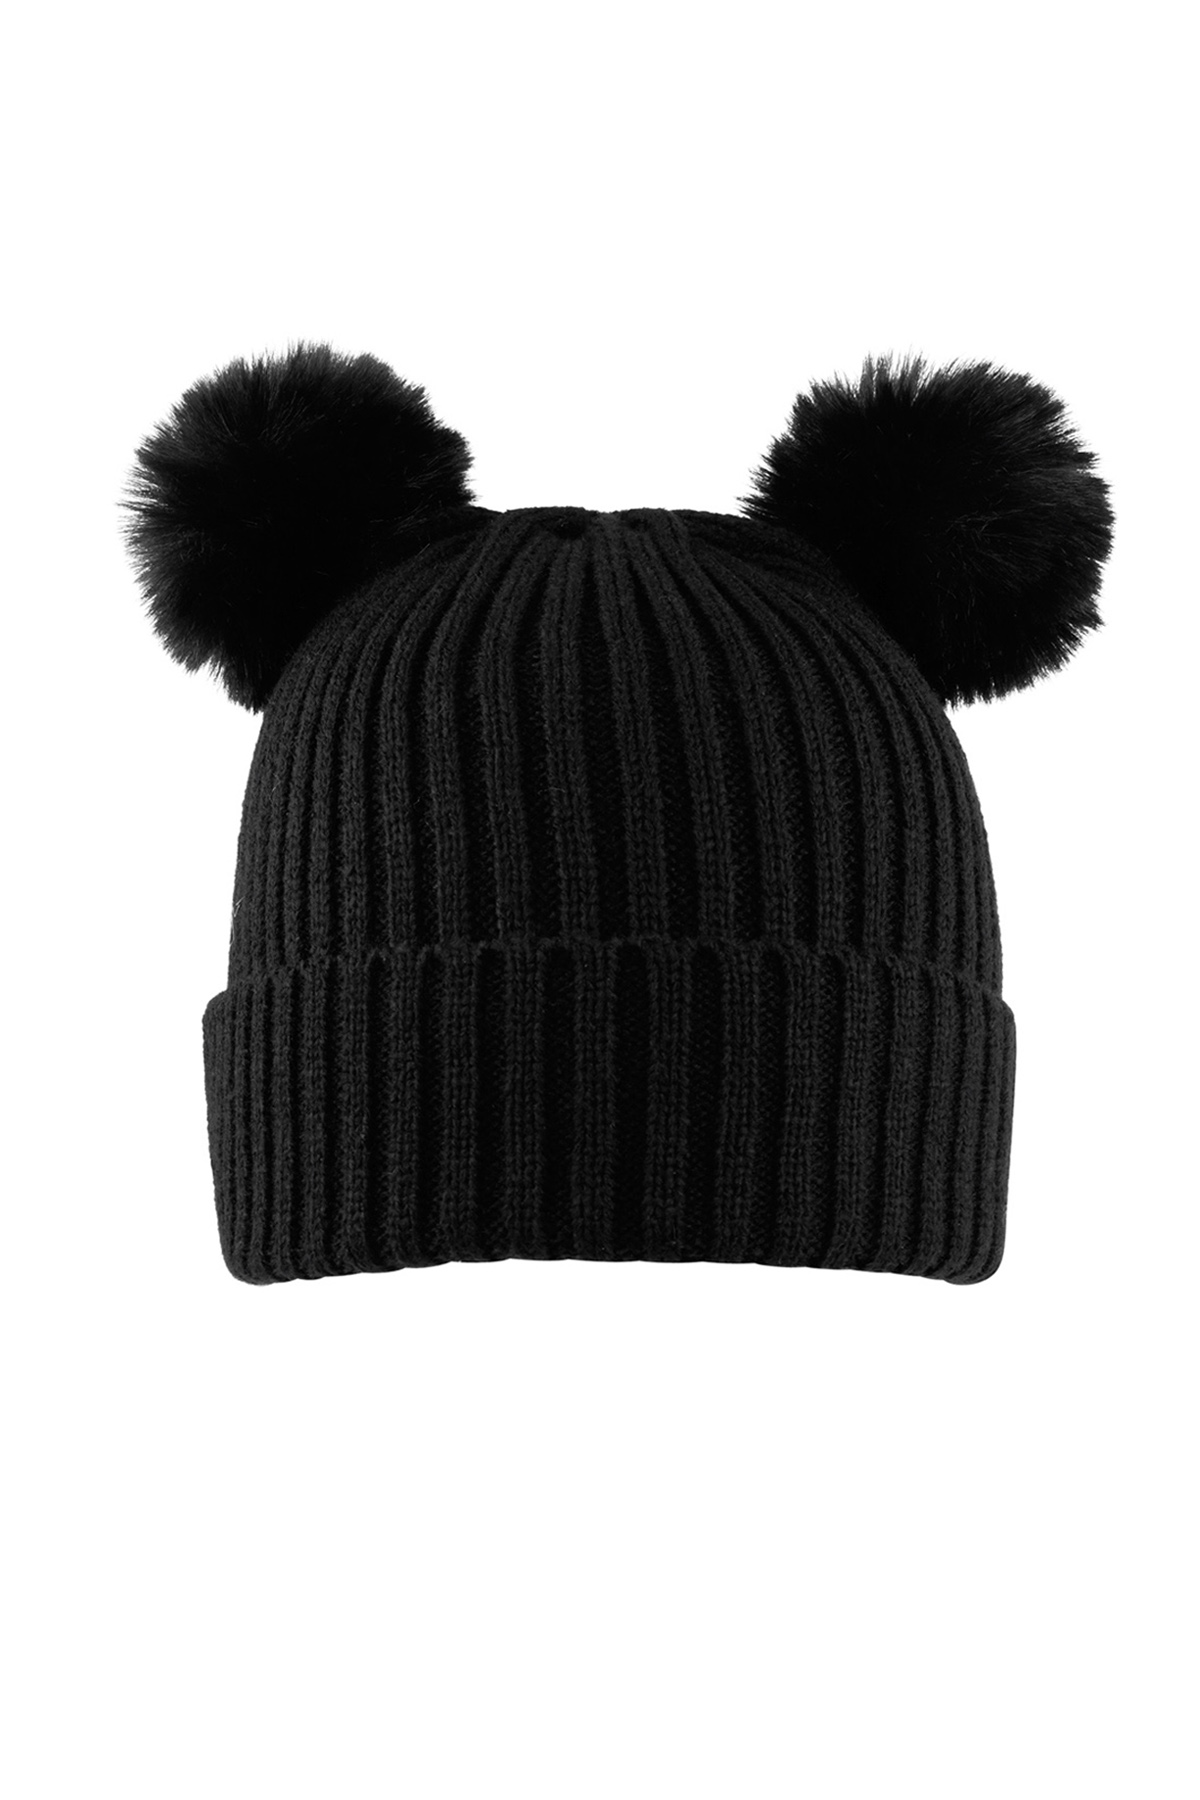 Adult - basic hat with black balls